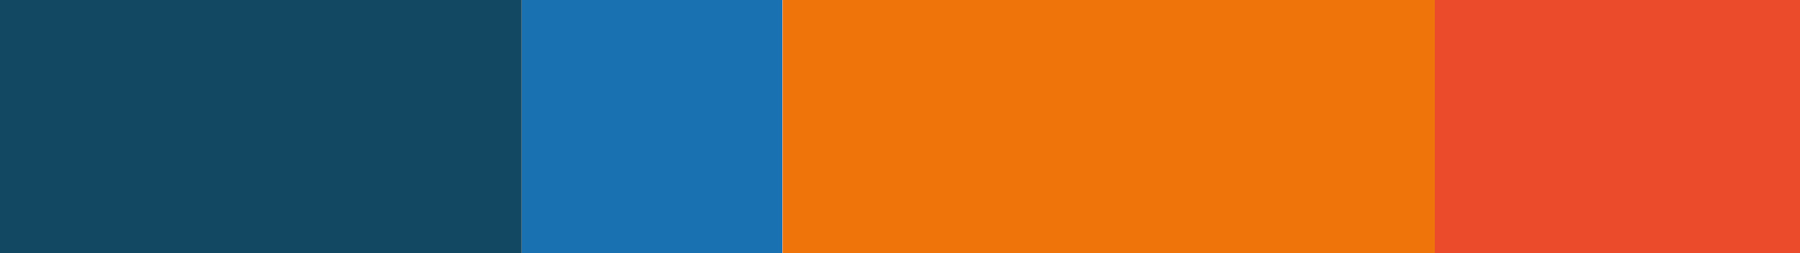 dark blue, light blue, light orange, and dark orange graph